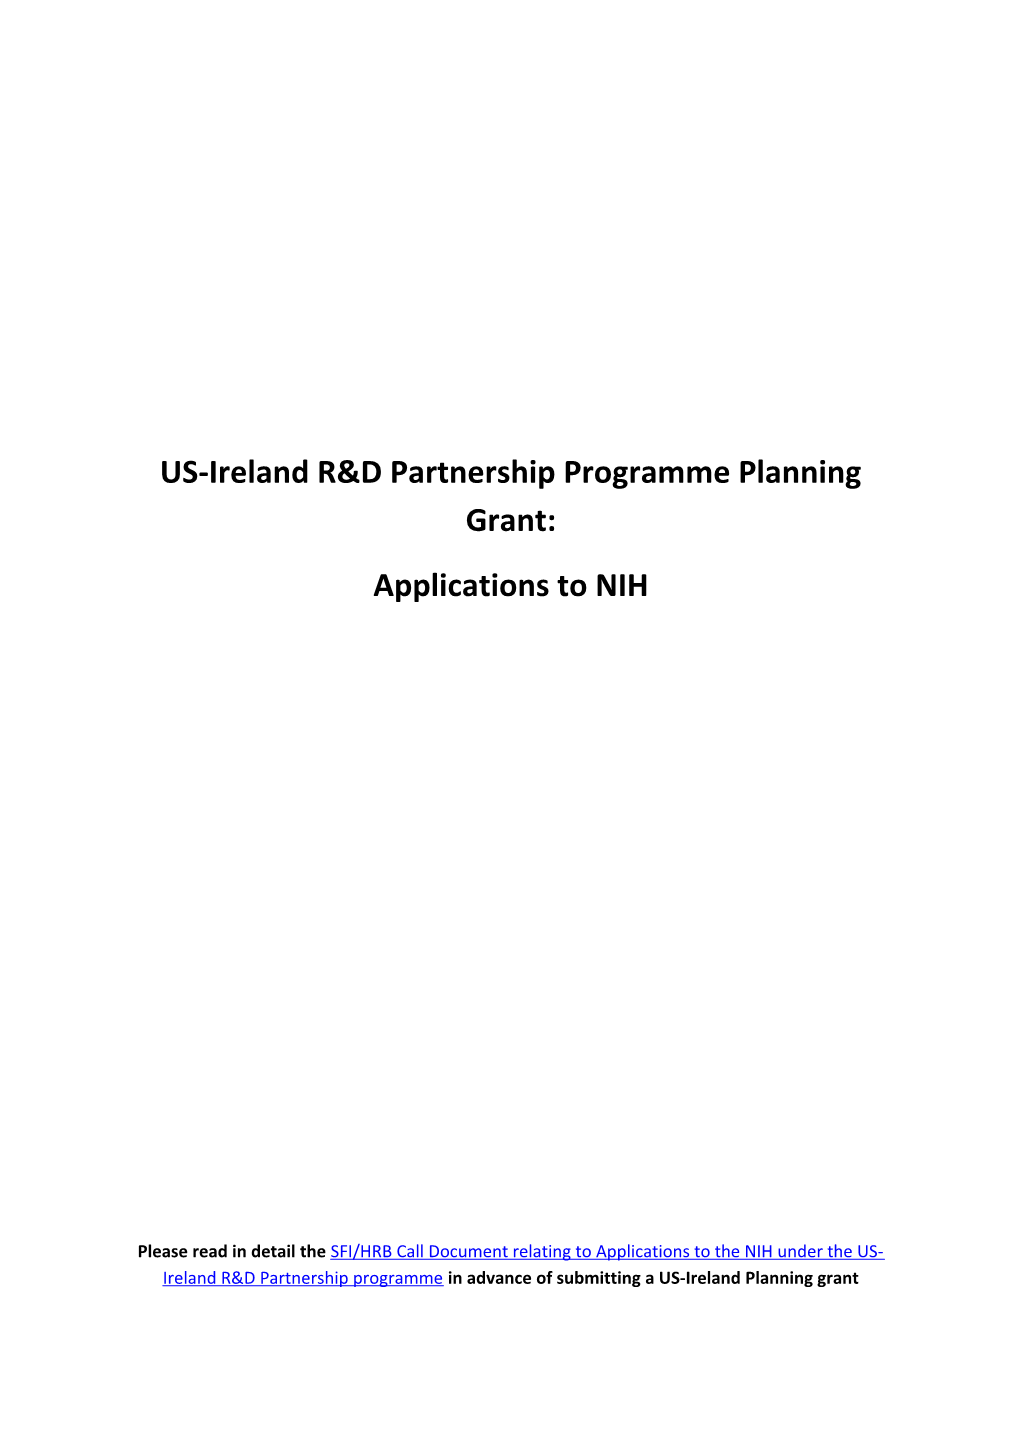 US-Ireland R&D Partnership Programme Planning Grant